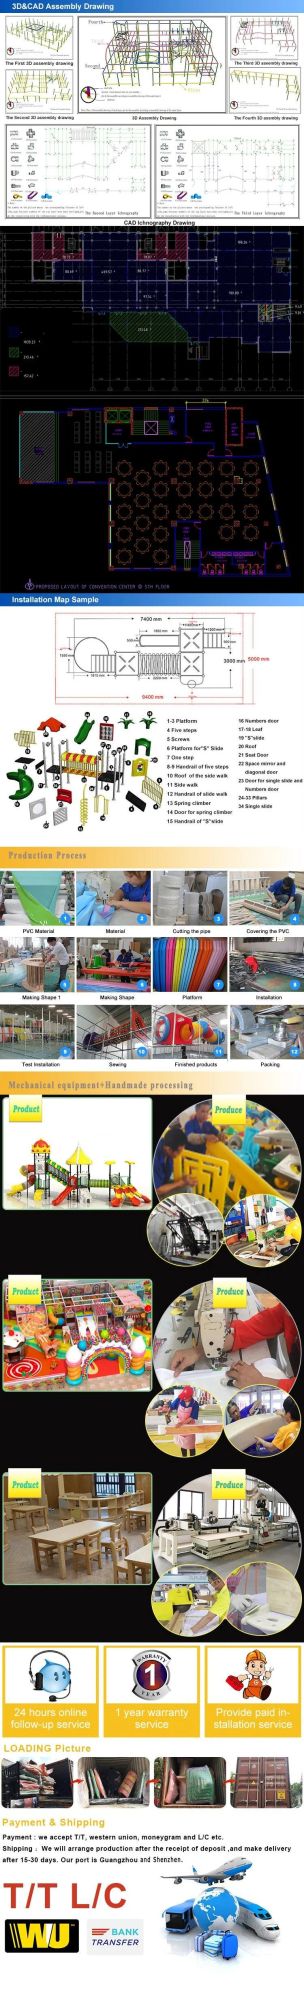 S020 FDA Large Capacity Playground Slide Wholesale in China